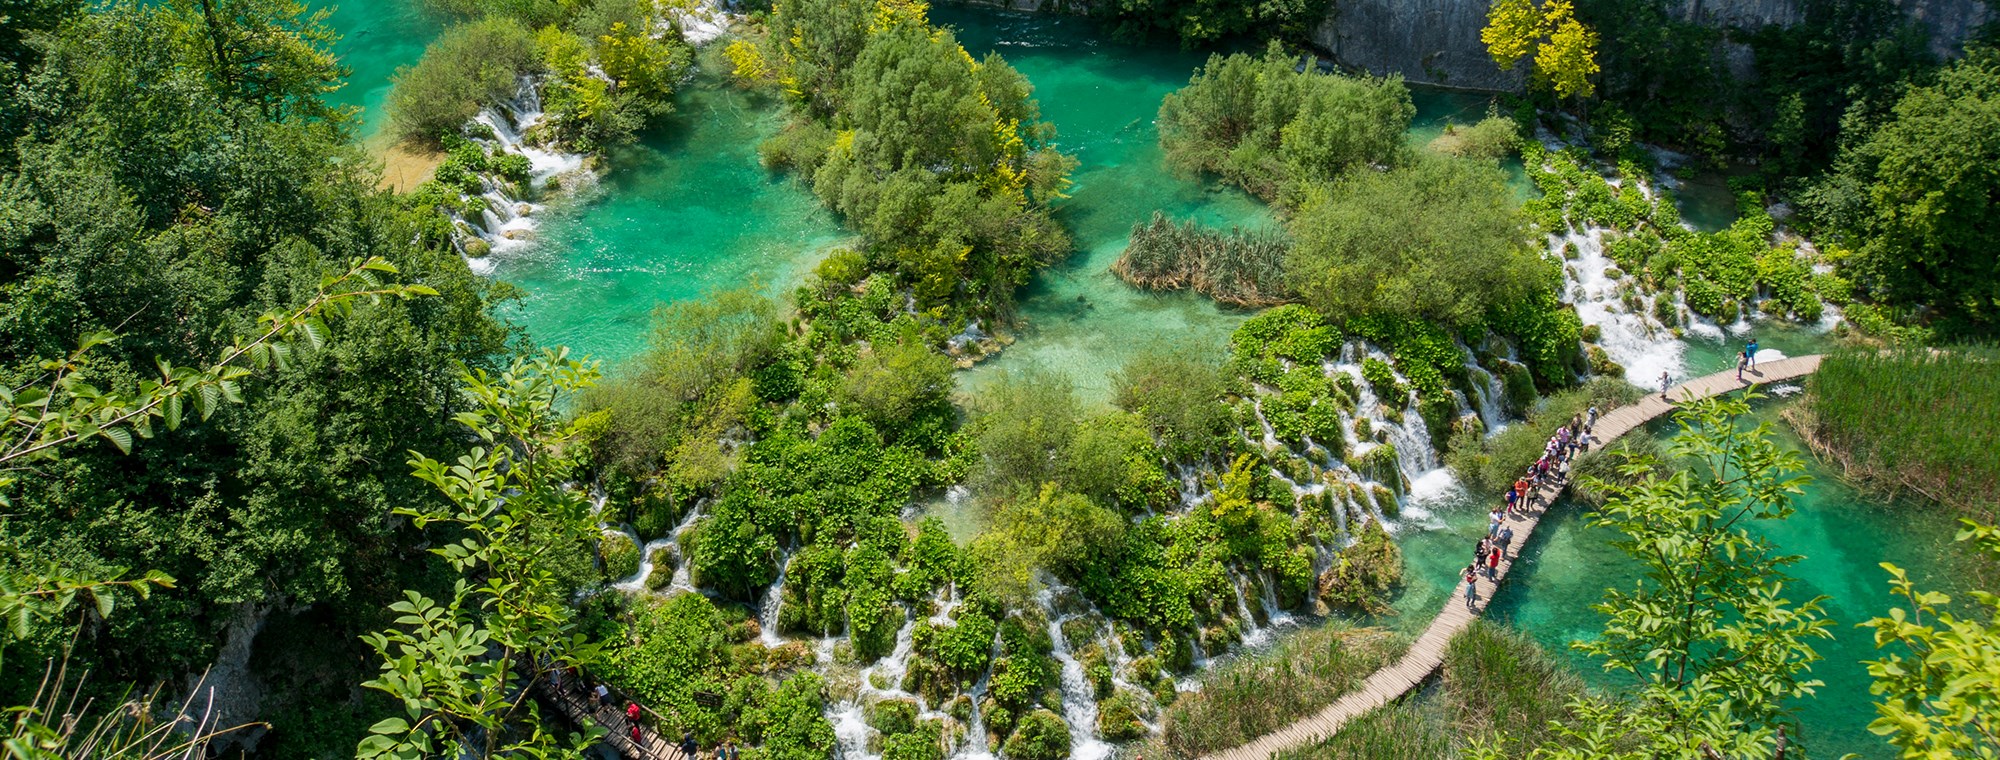 Croatia tours of Plitvice National Park